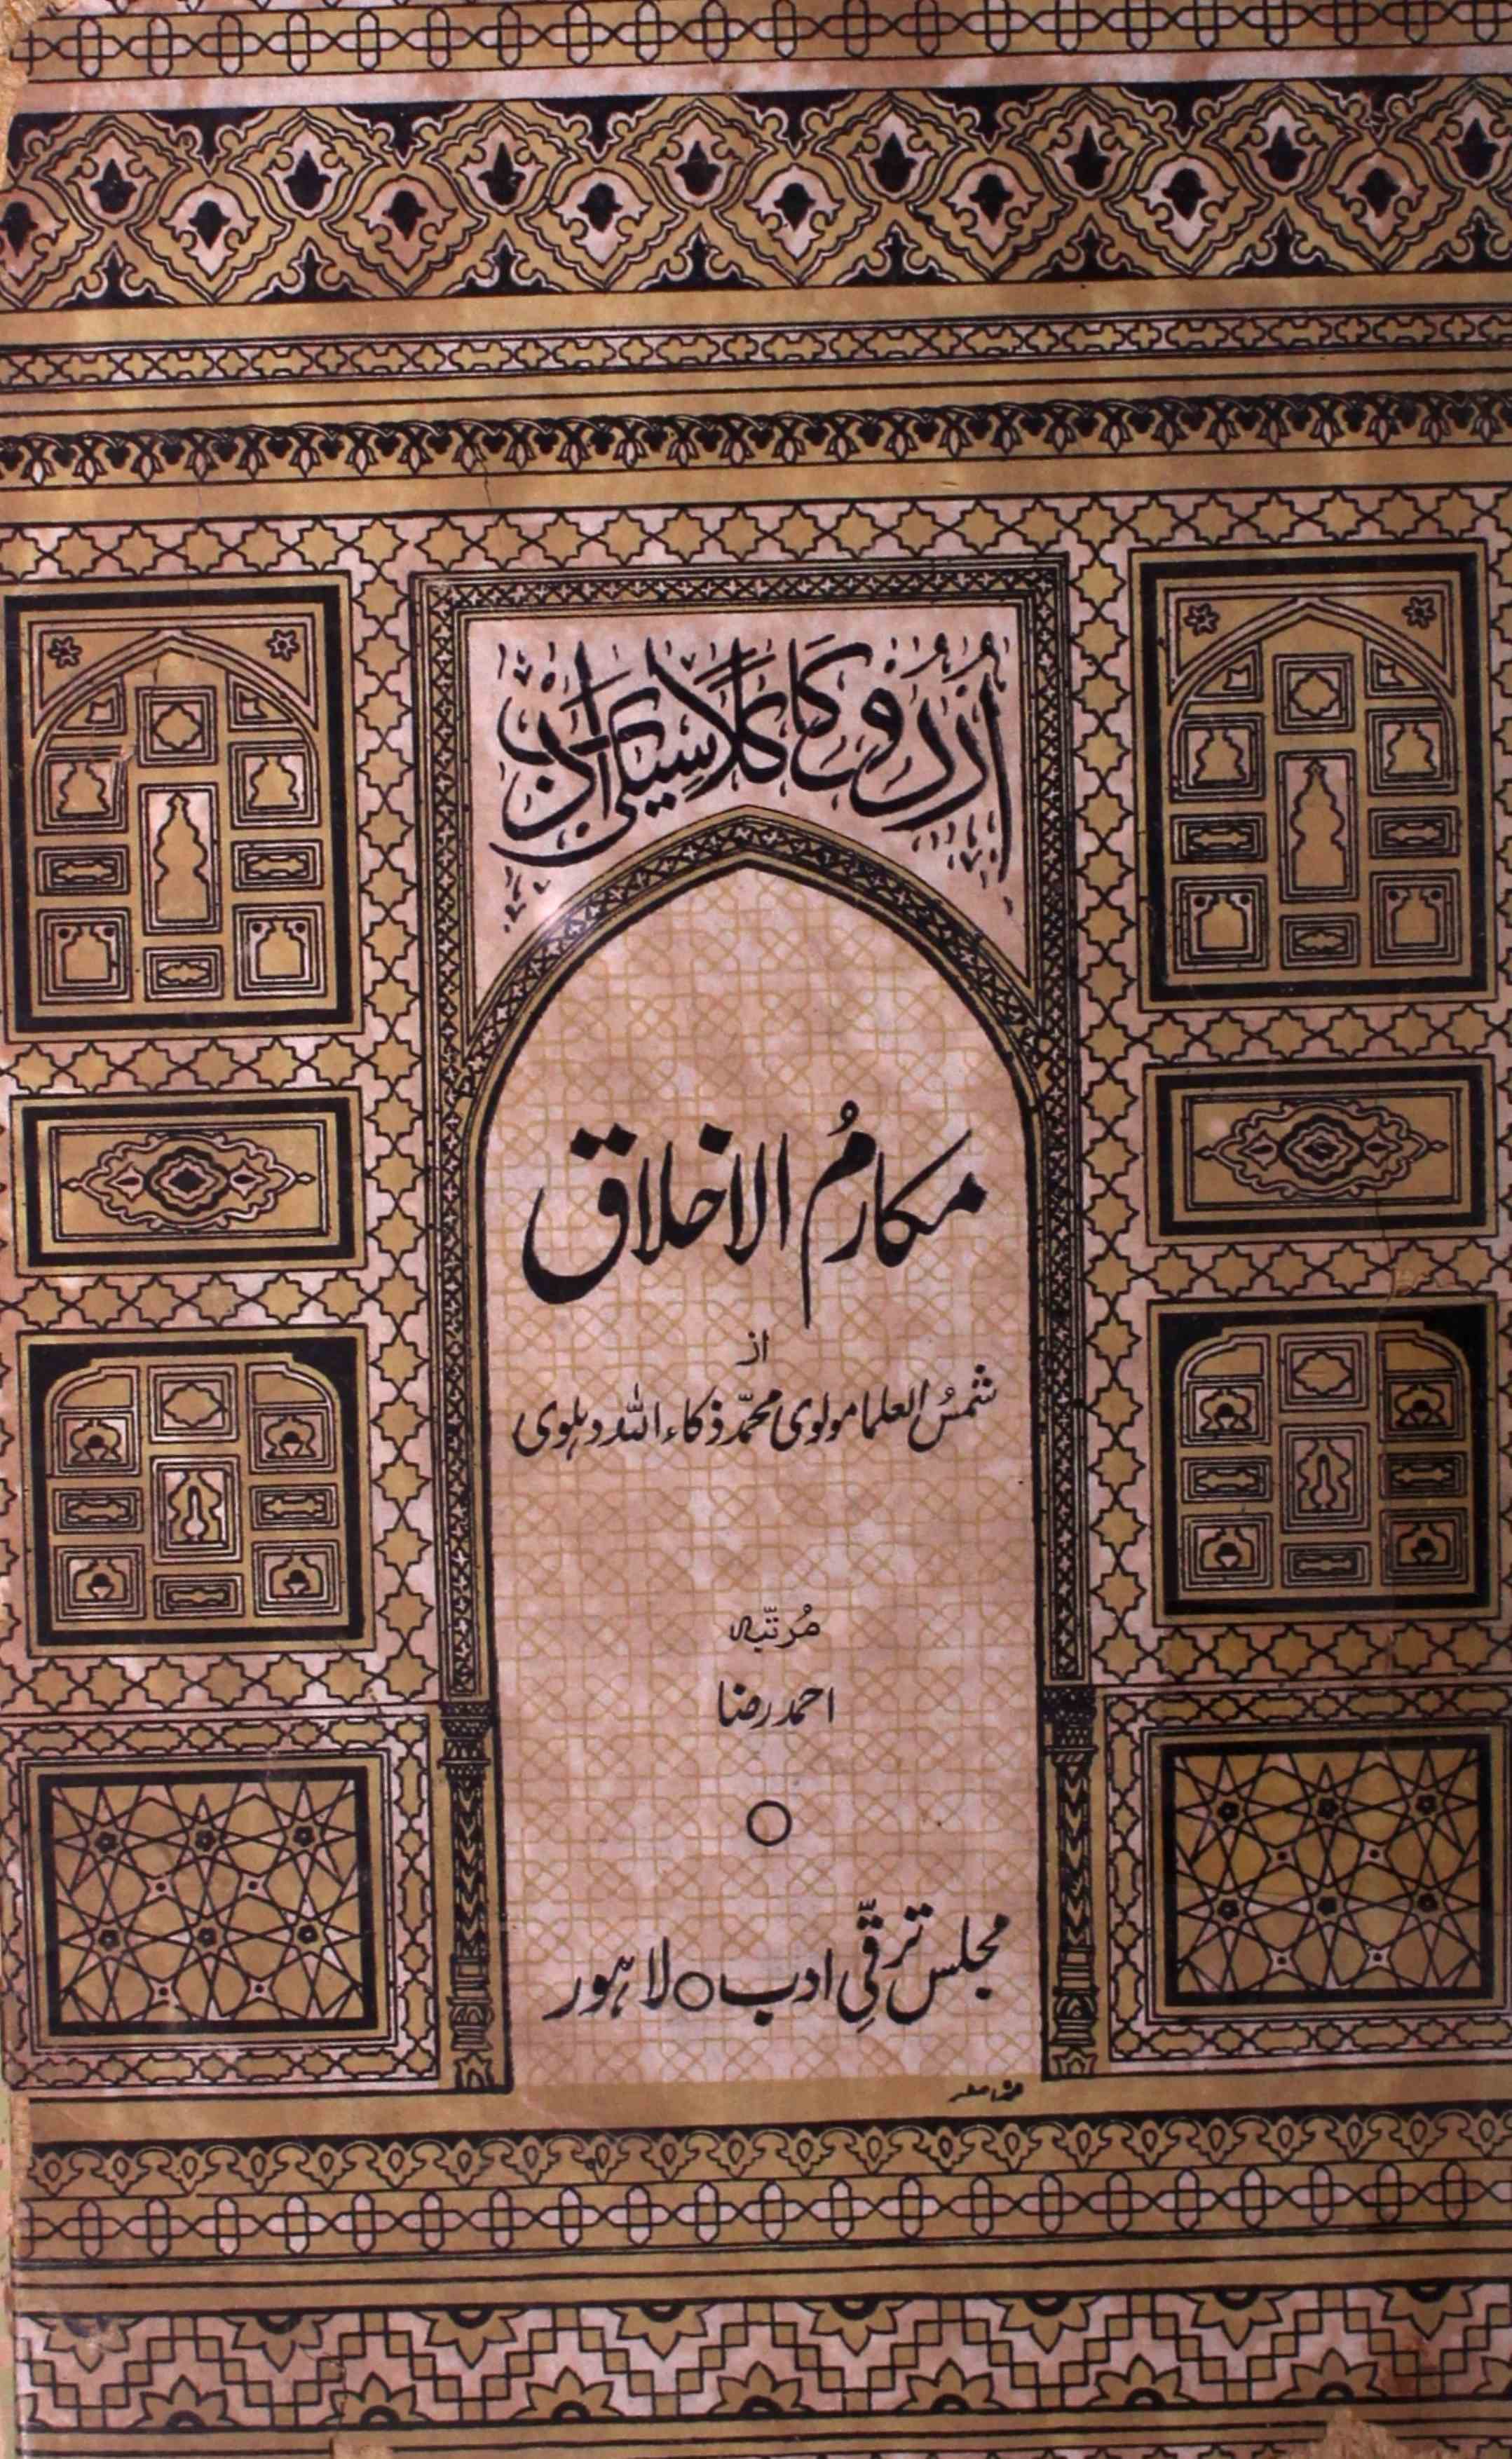 Mukarim-ul-Akhlaq